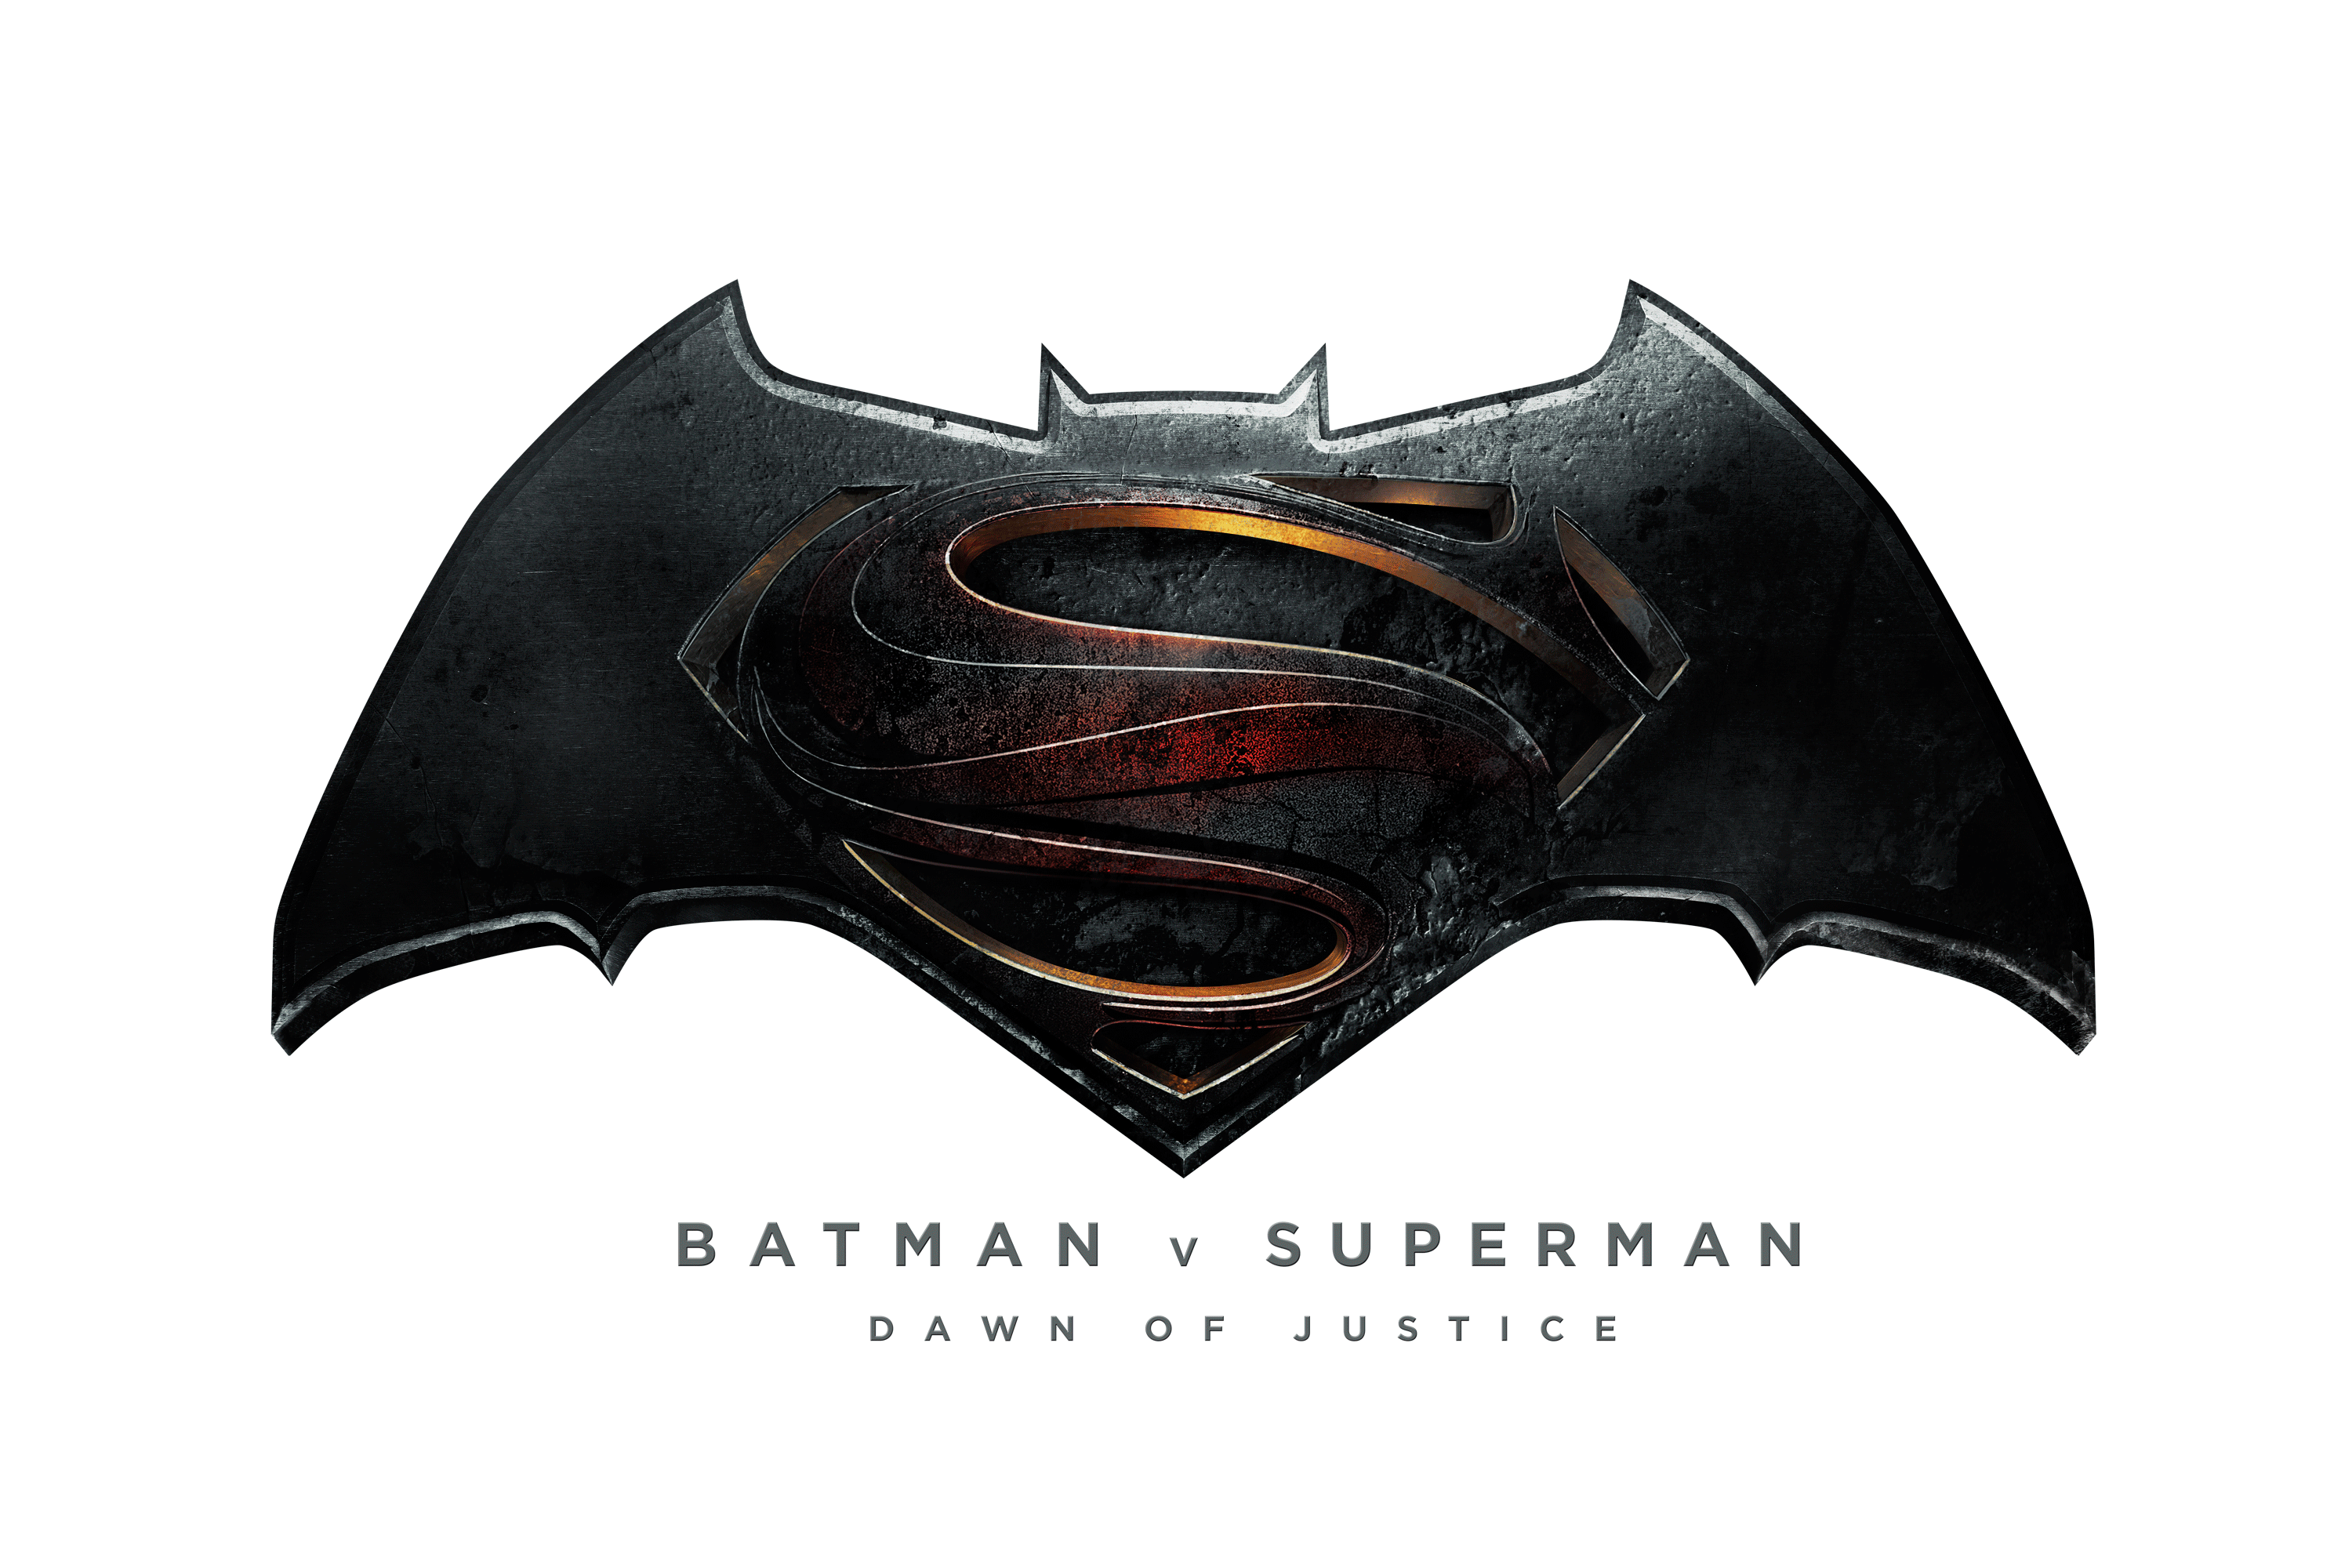 Batman Vs Superman Image PNG Image